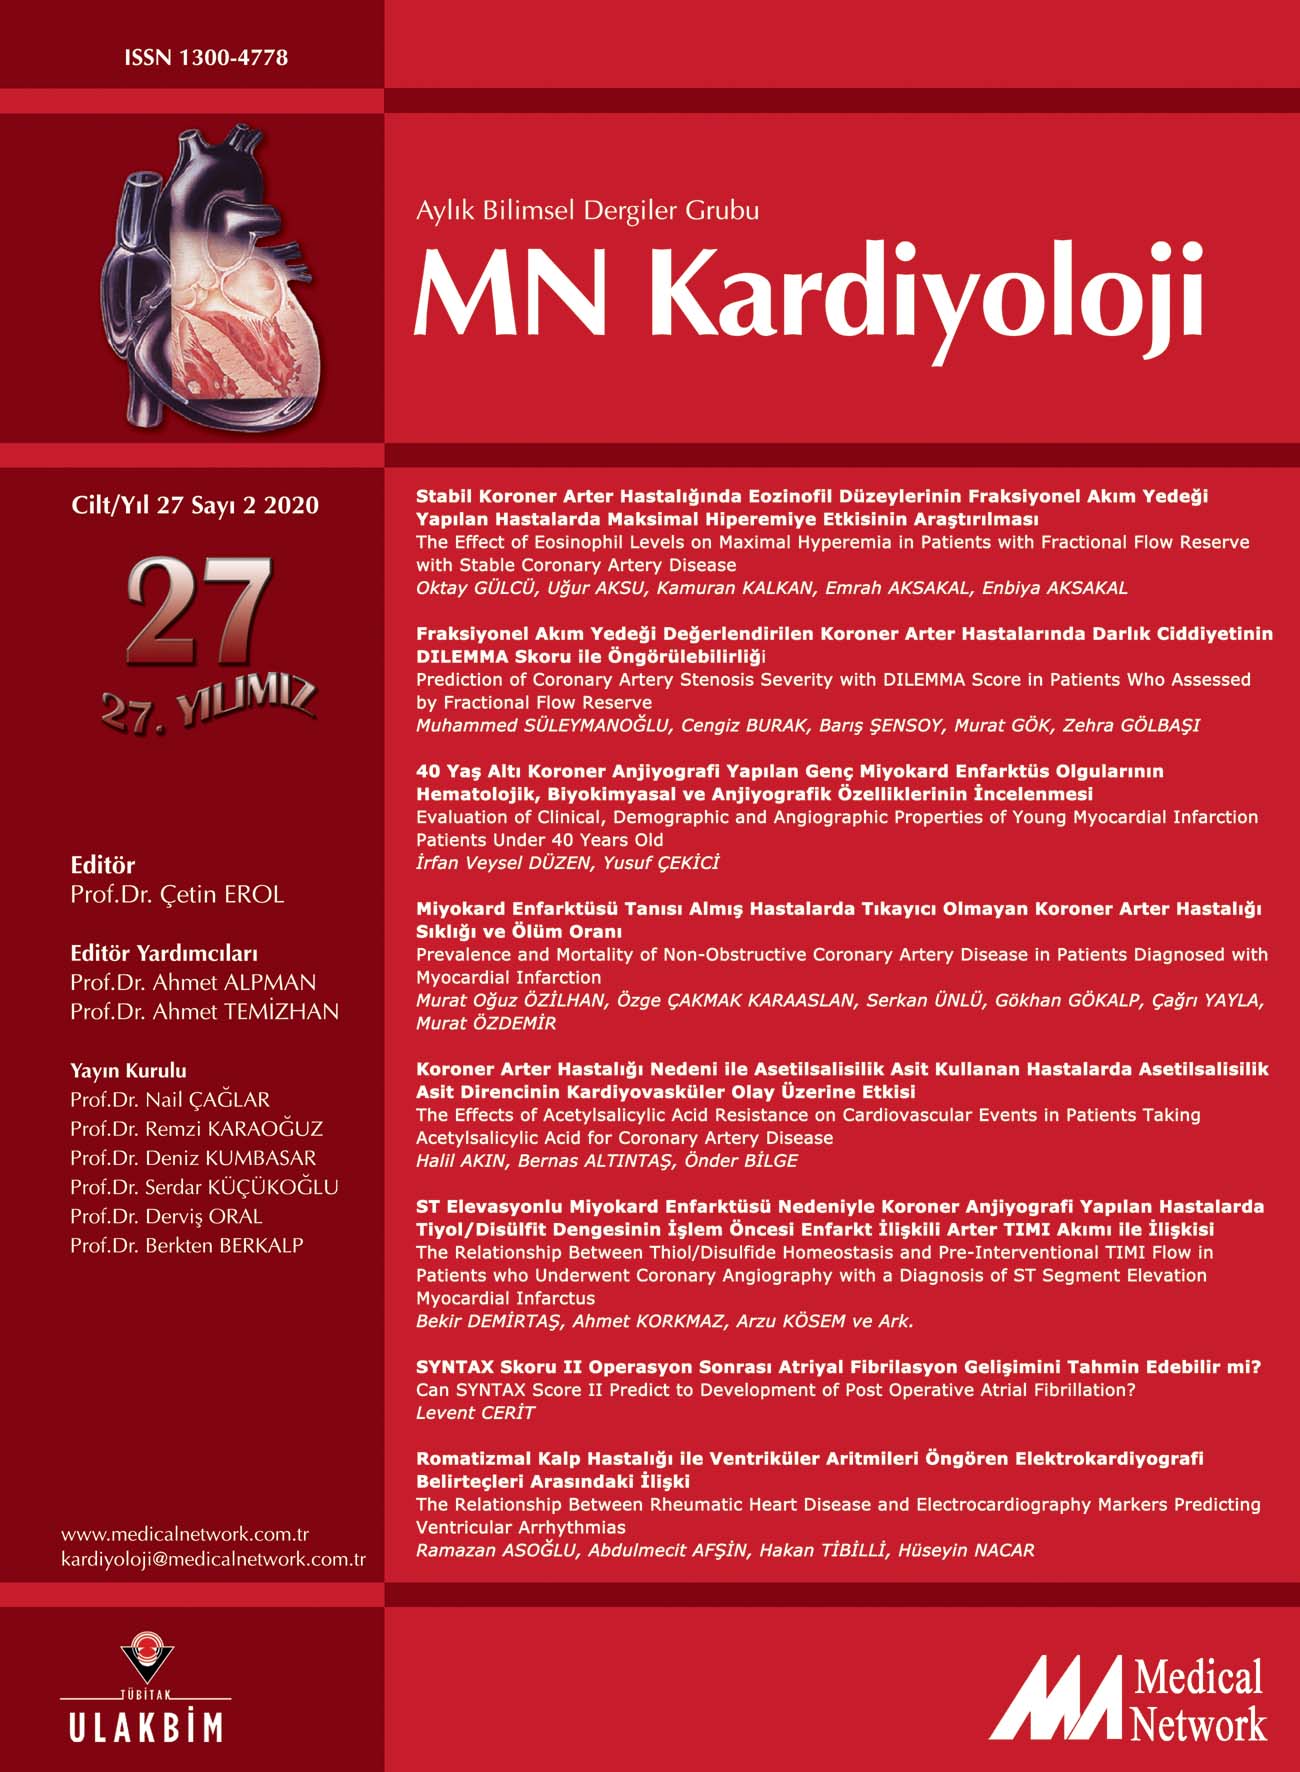 <p>MN Kardiyoloji Cilt: 27 Sayı: 2 2020 MN Cardiology Volume: 27 No: 2 2020</p>